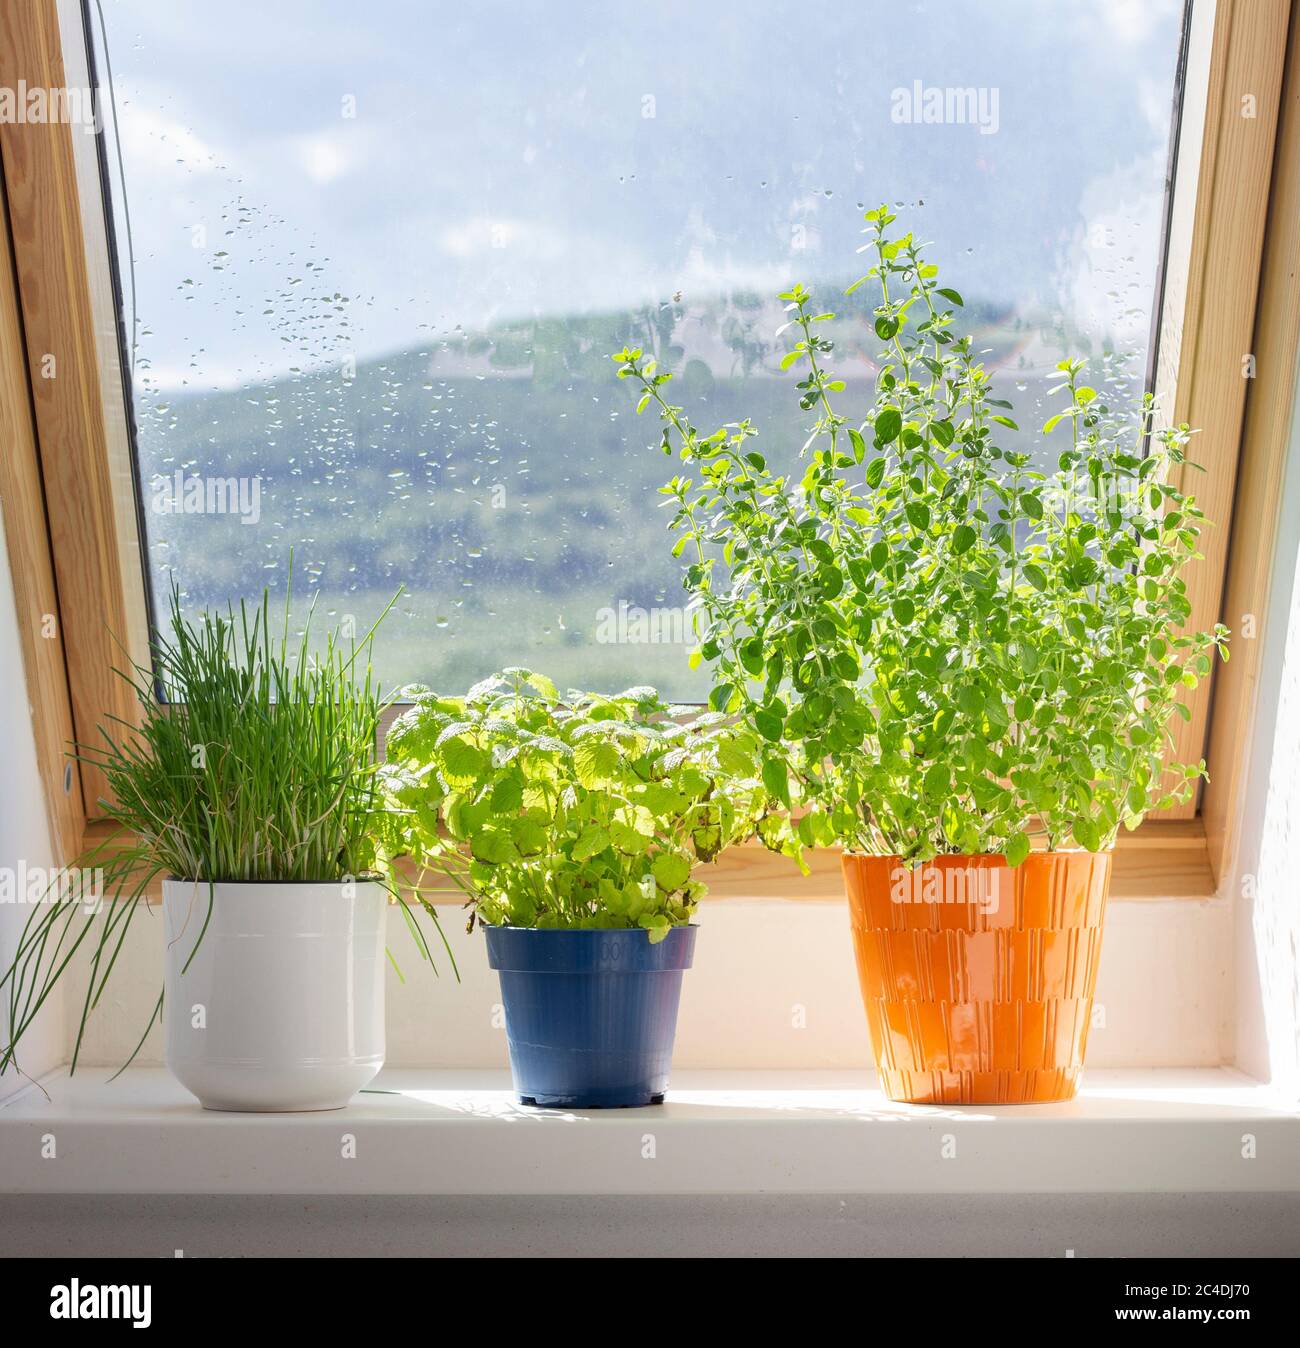 herbs growing in pots on window sill Stock Photo